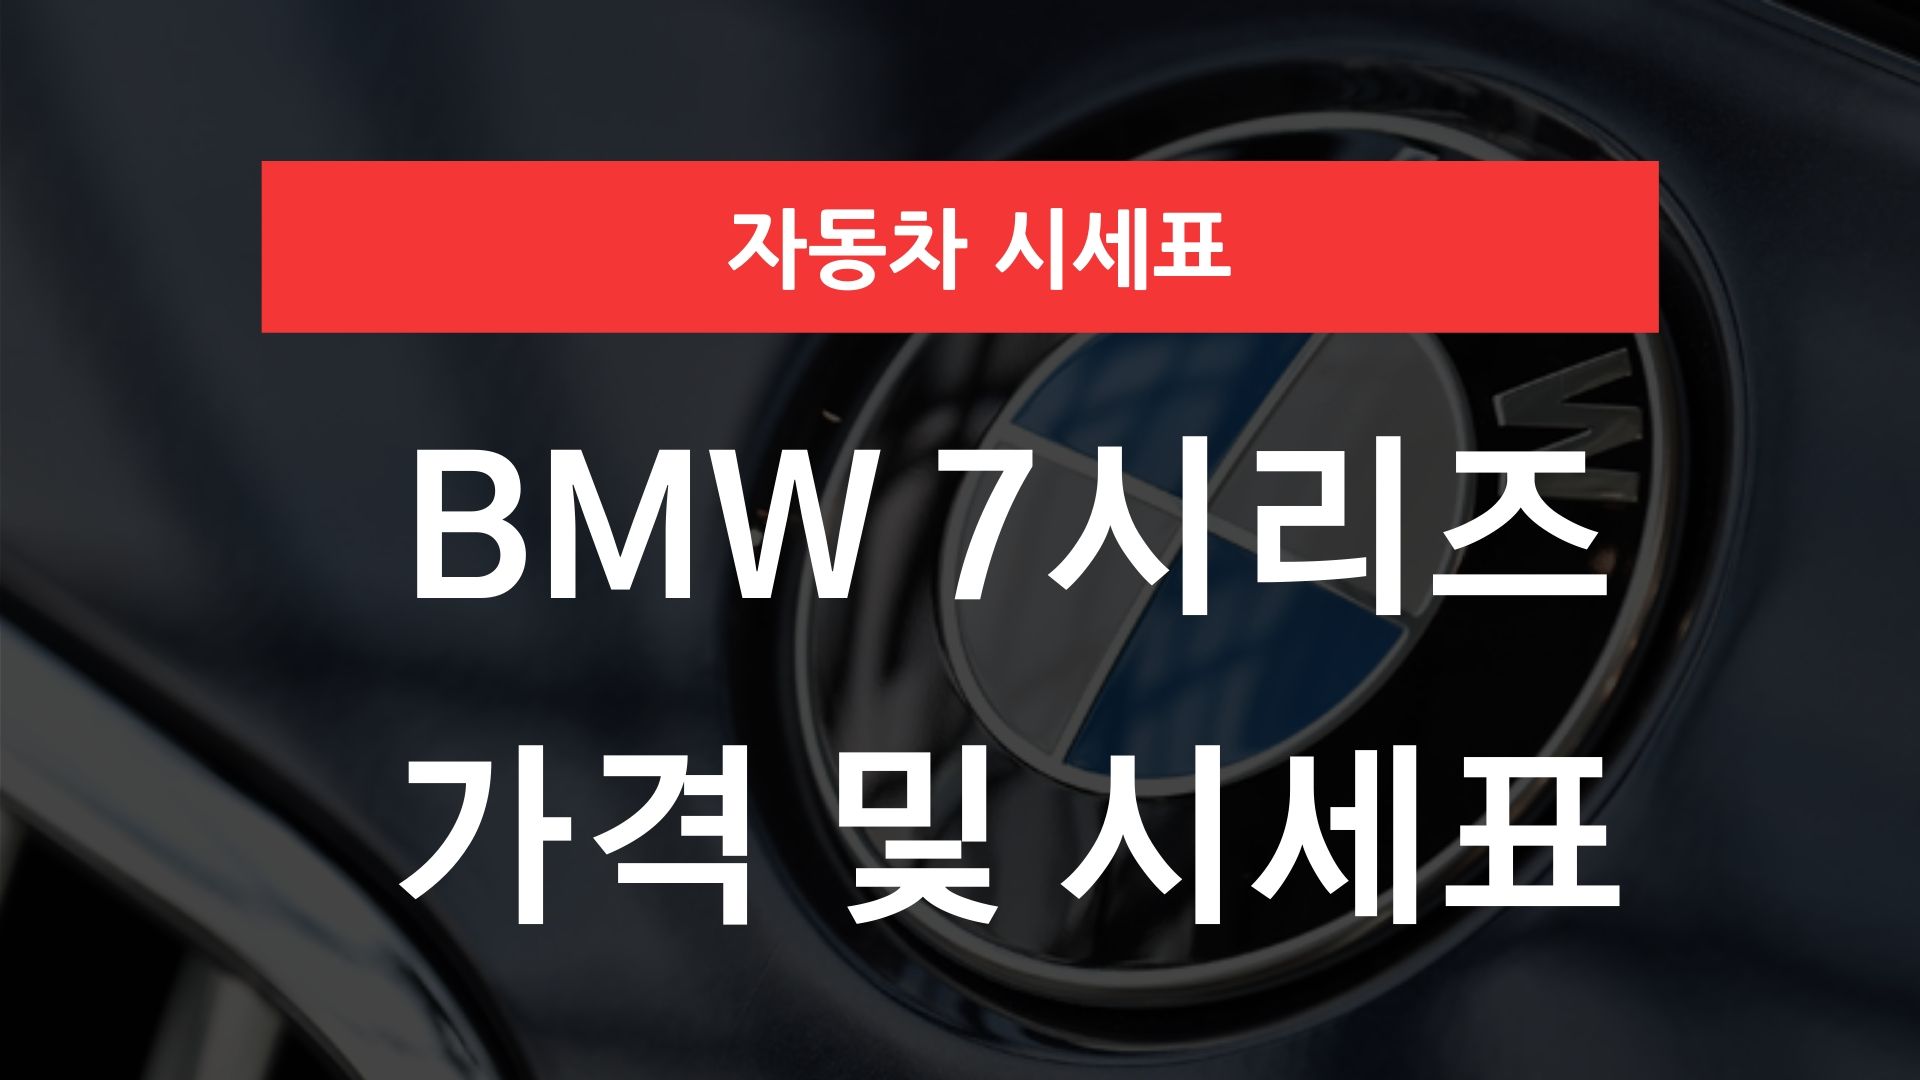 BMW 7시리즈 가격